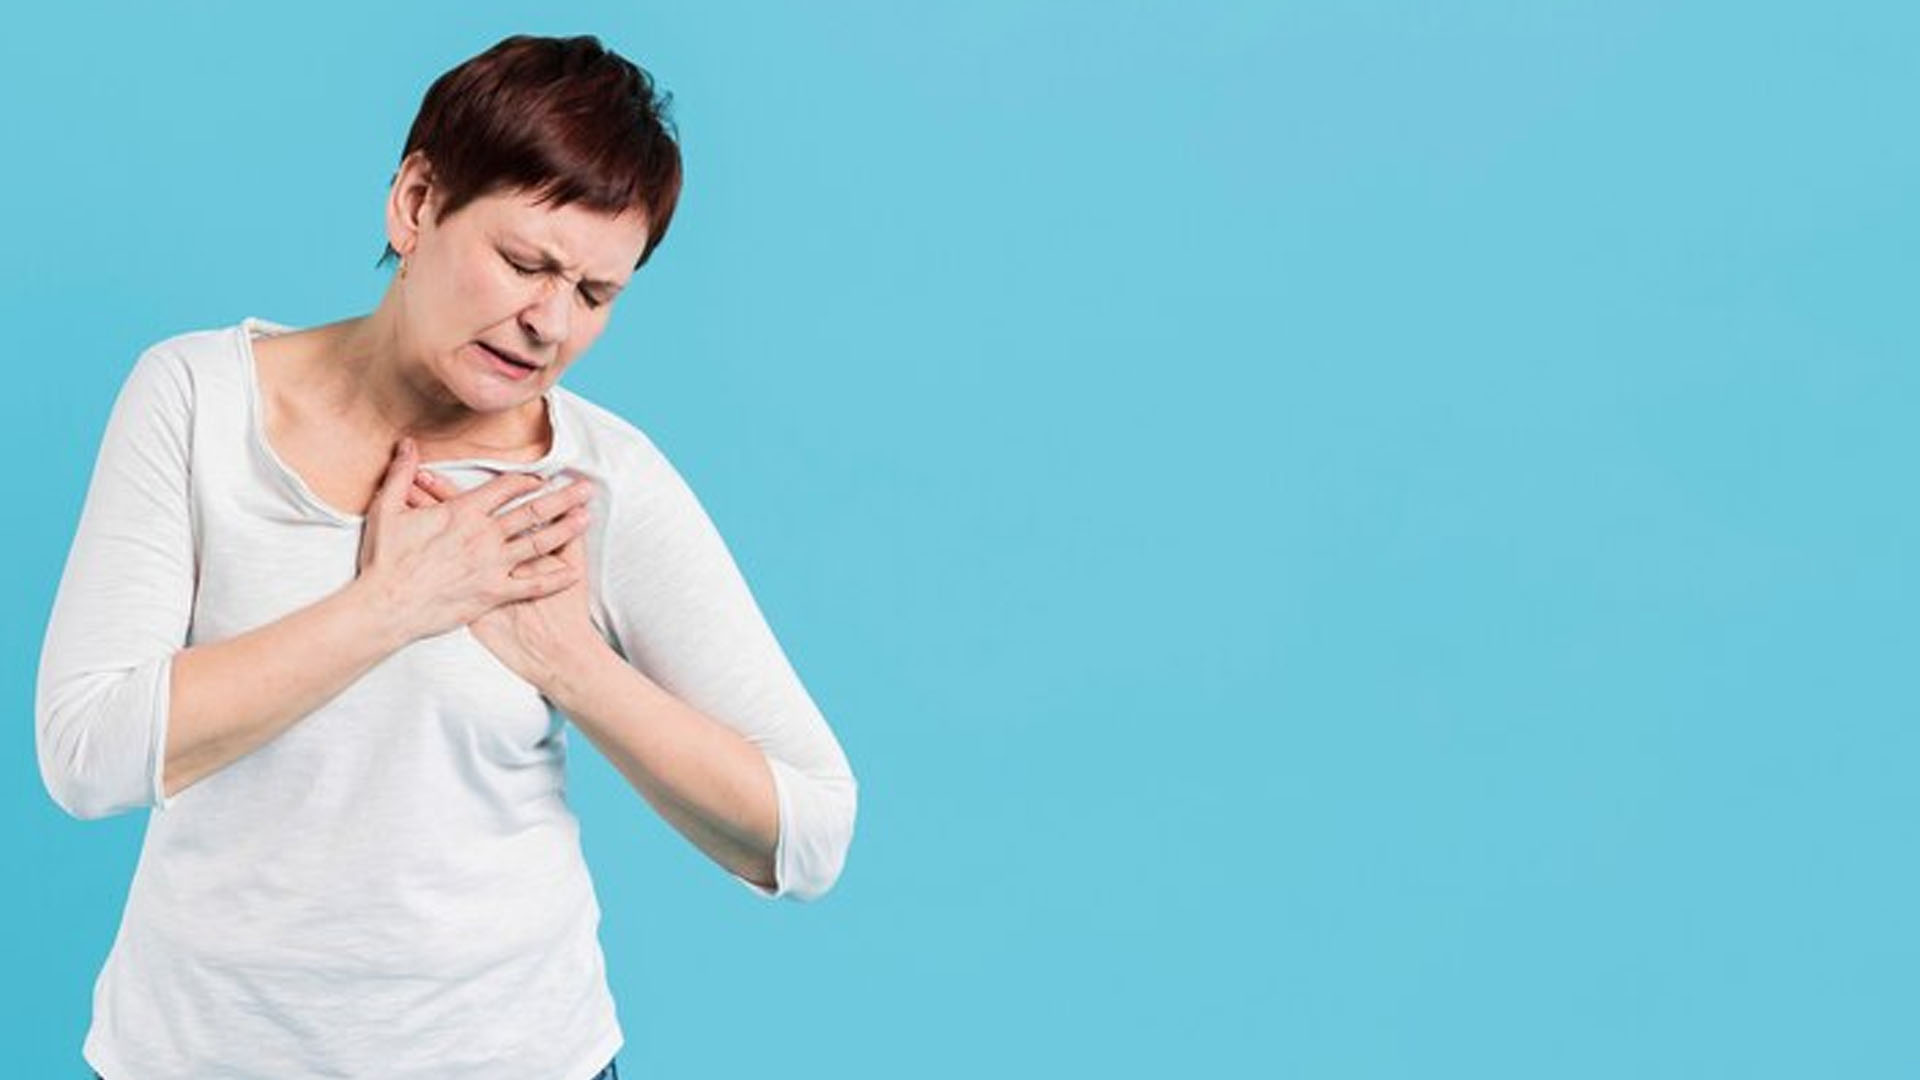 Is Nipple Pain a Symptom of Pregnancy?